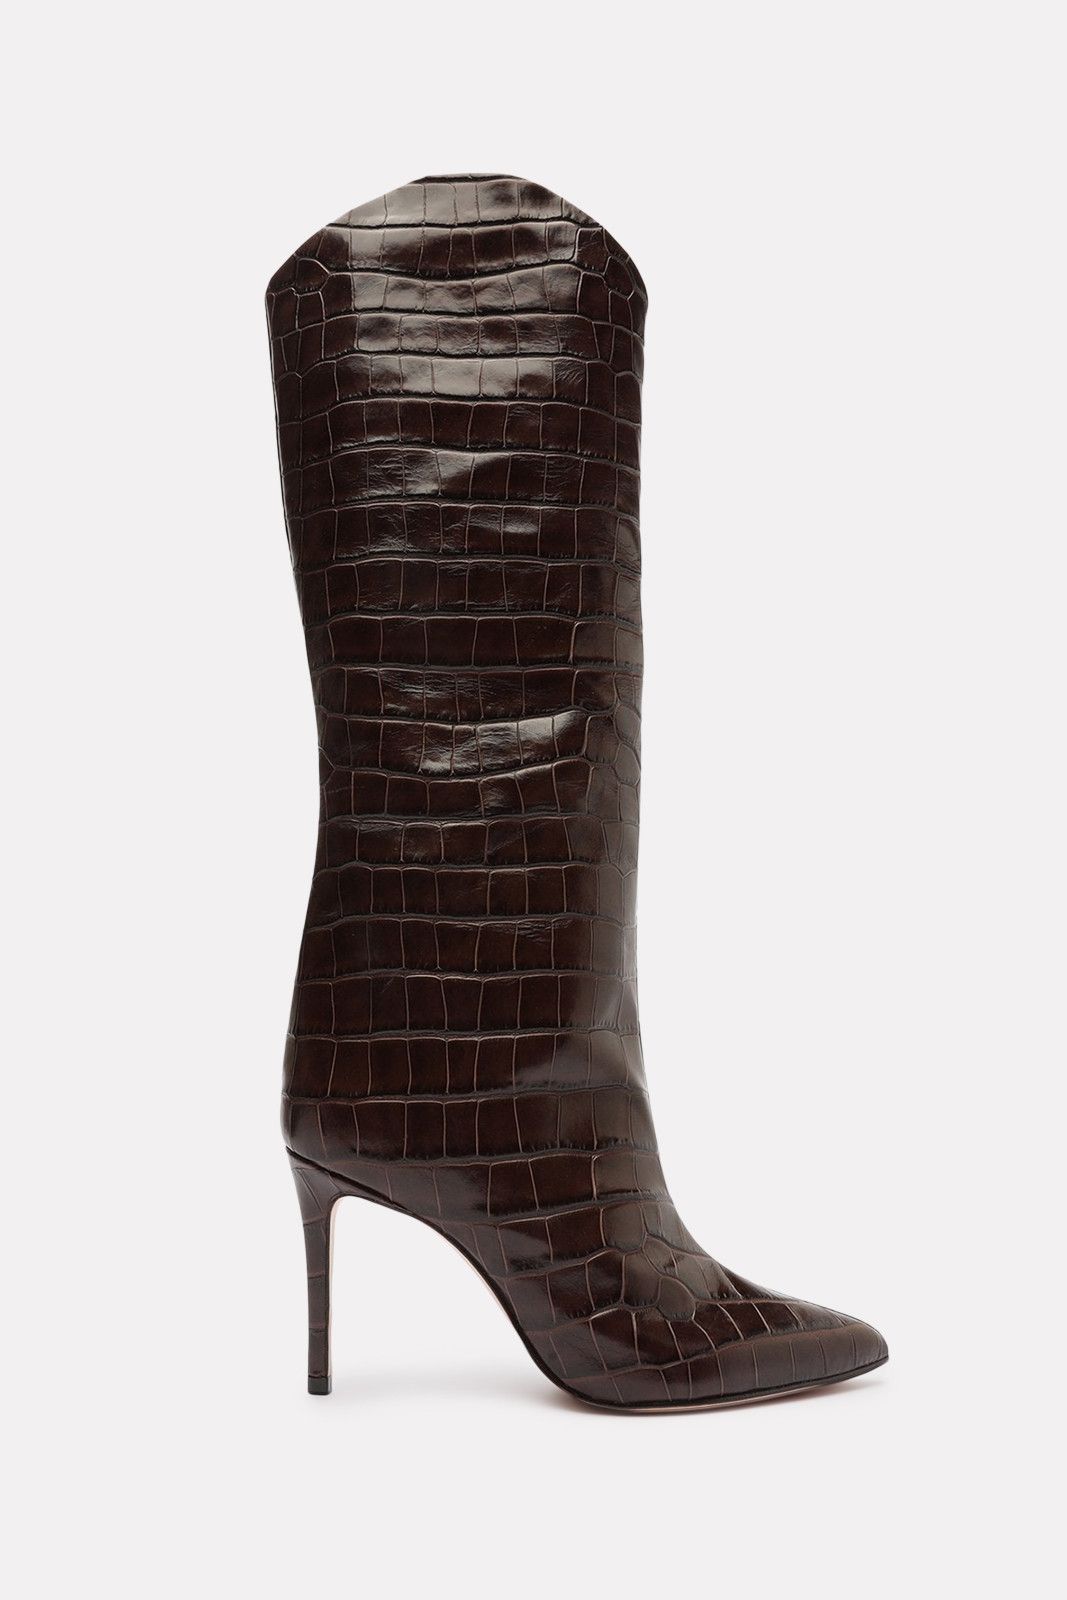 SCHUTZ Maryana Crocodile-Embossed Leather Boot | EVEREVE | Evereve